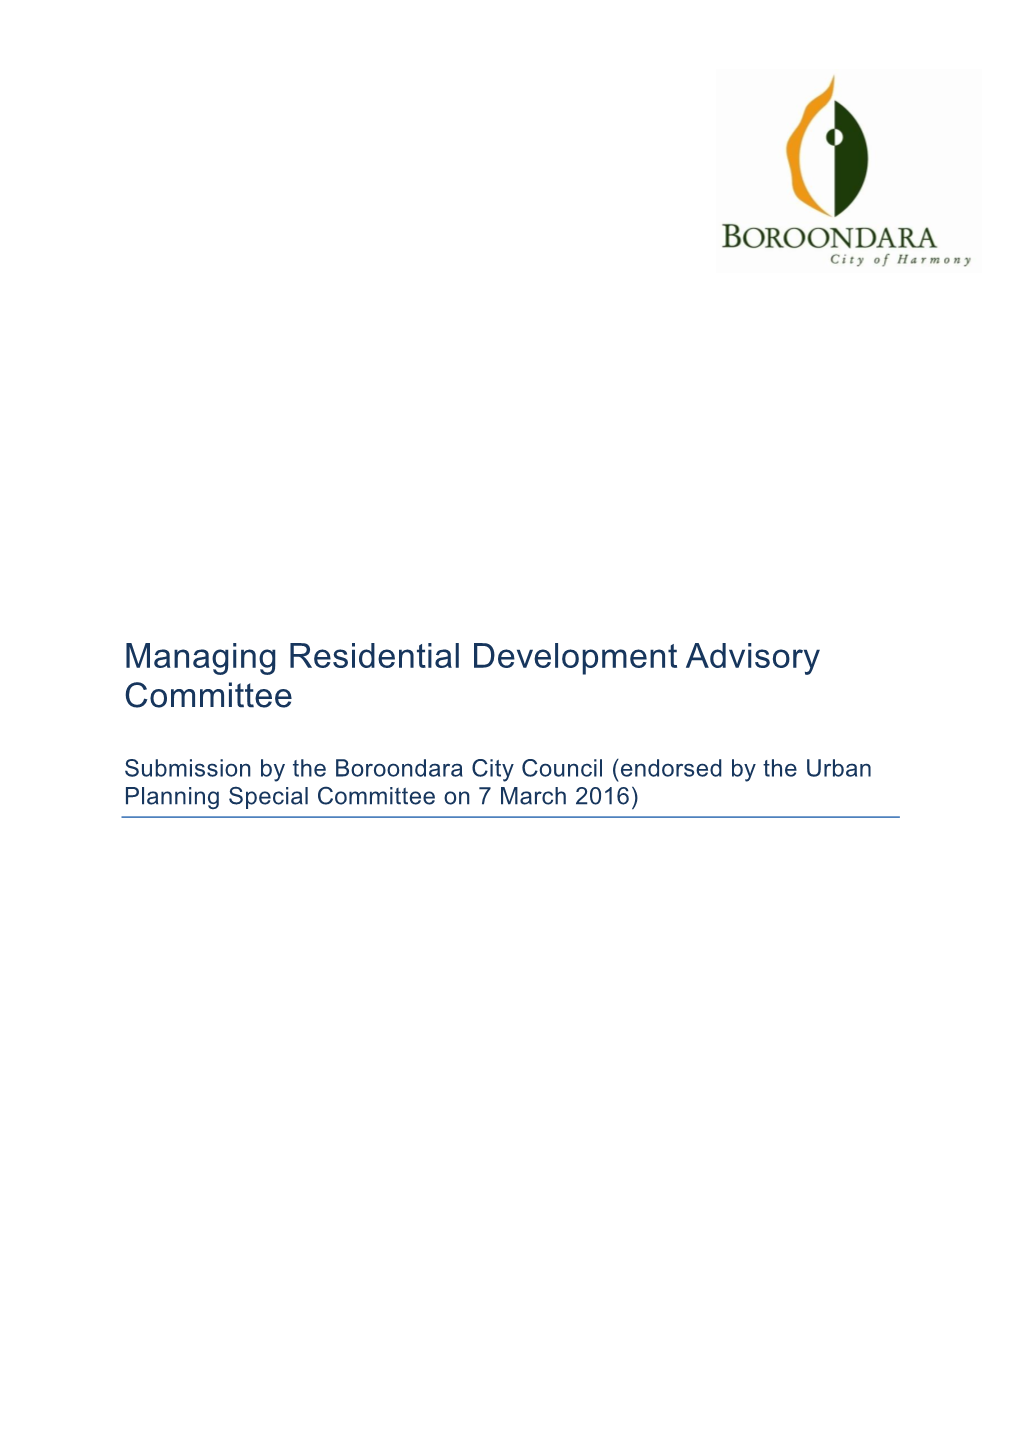 Managing Residential Development Advisory Committee